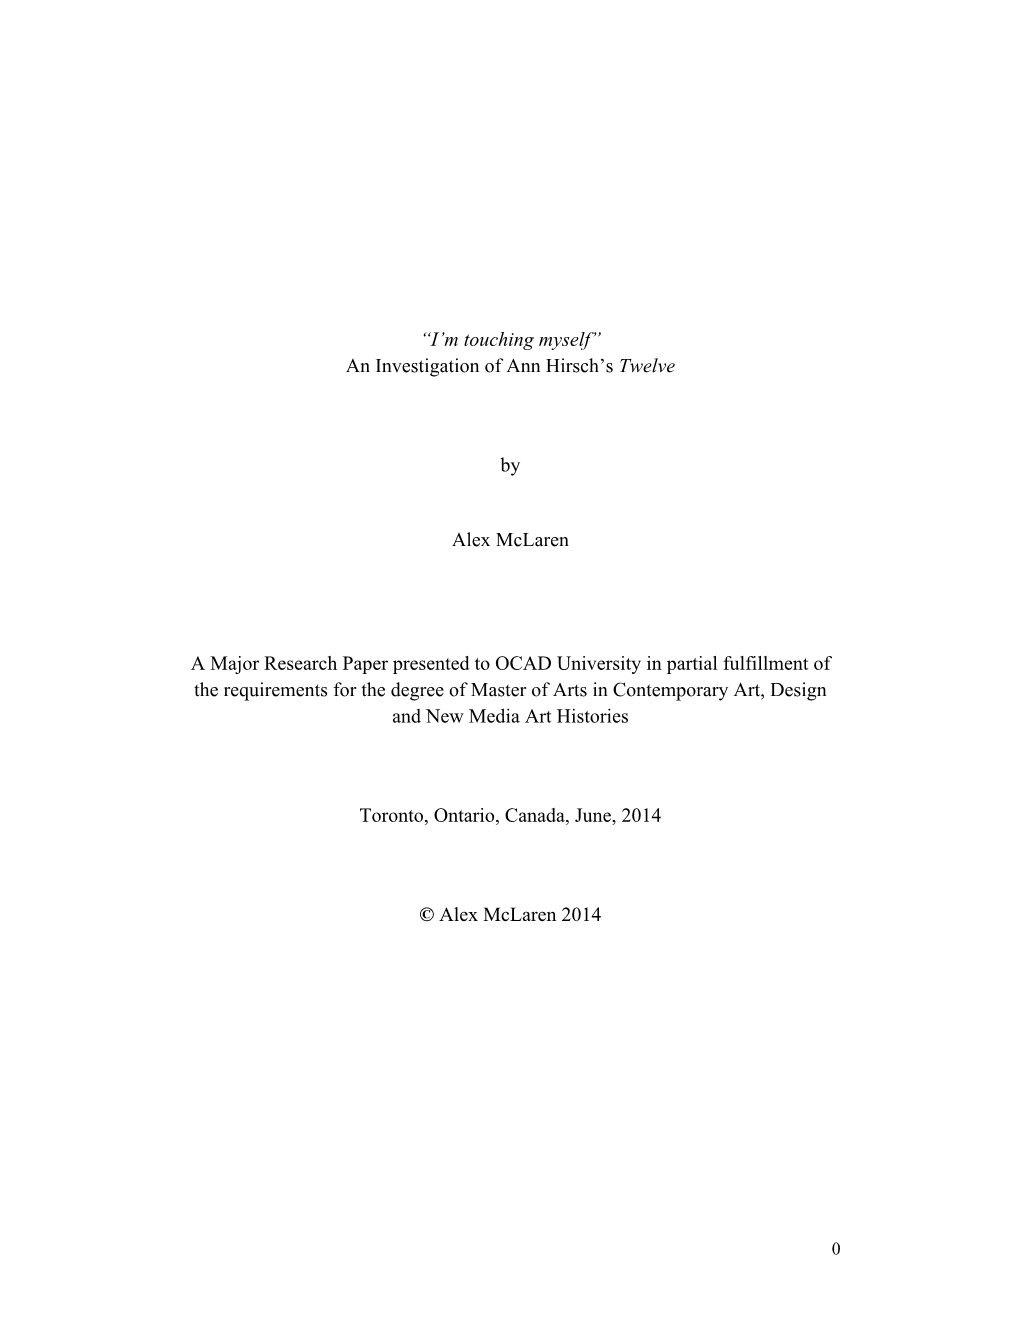 An Investigation of Ann Hirsch's Twelve by Alex Mclaren a Major Research Paper Presented to OCAD U